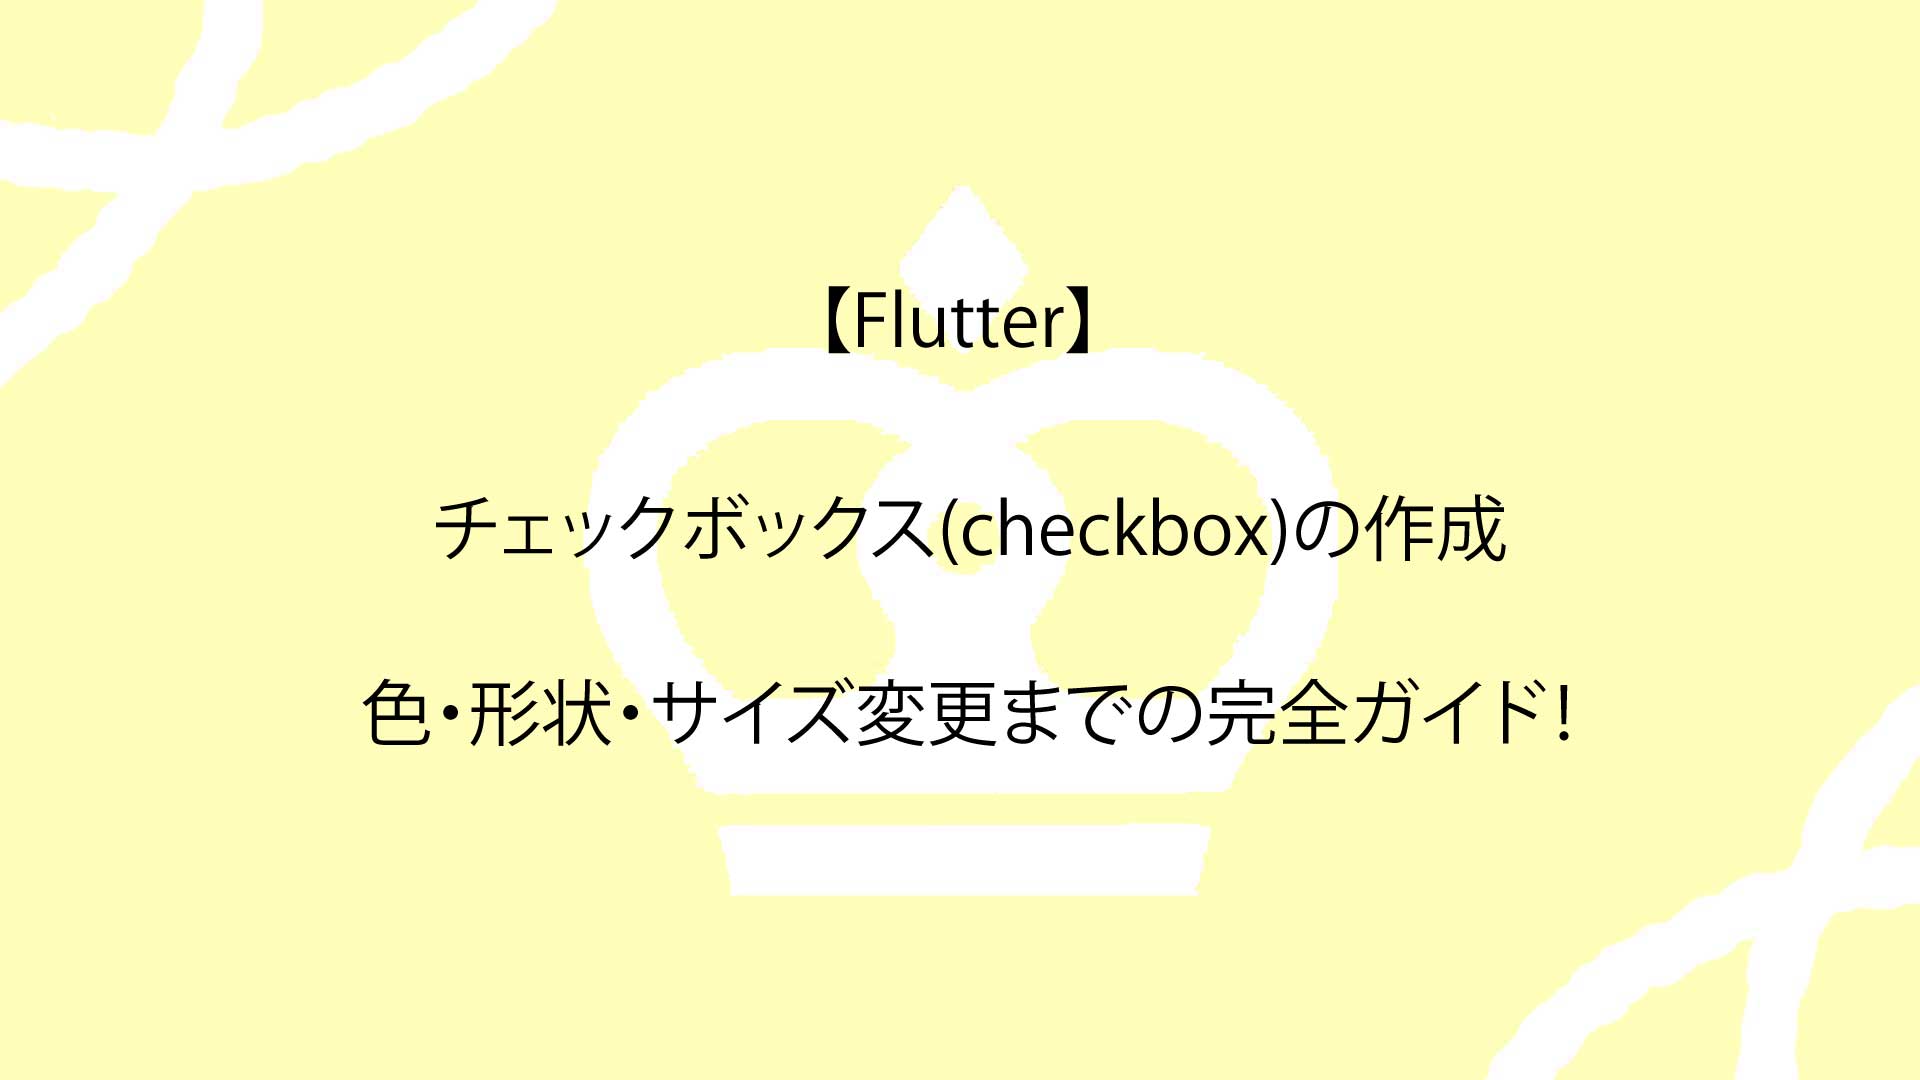 【Flutter】チェックボックス(checkbox)の作成から色・形状・サイズ変更までの完全ガイド！